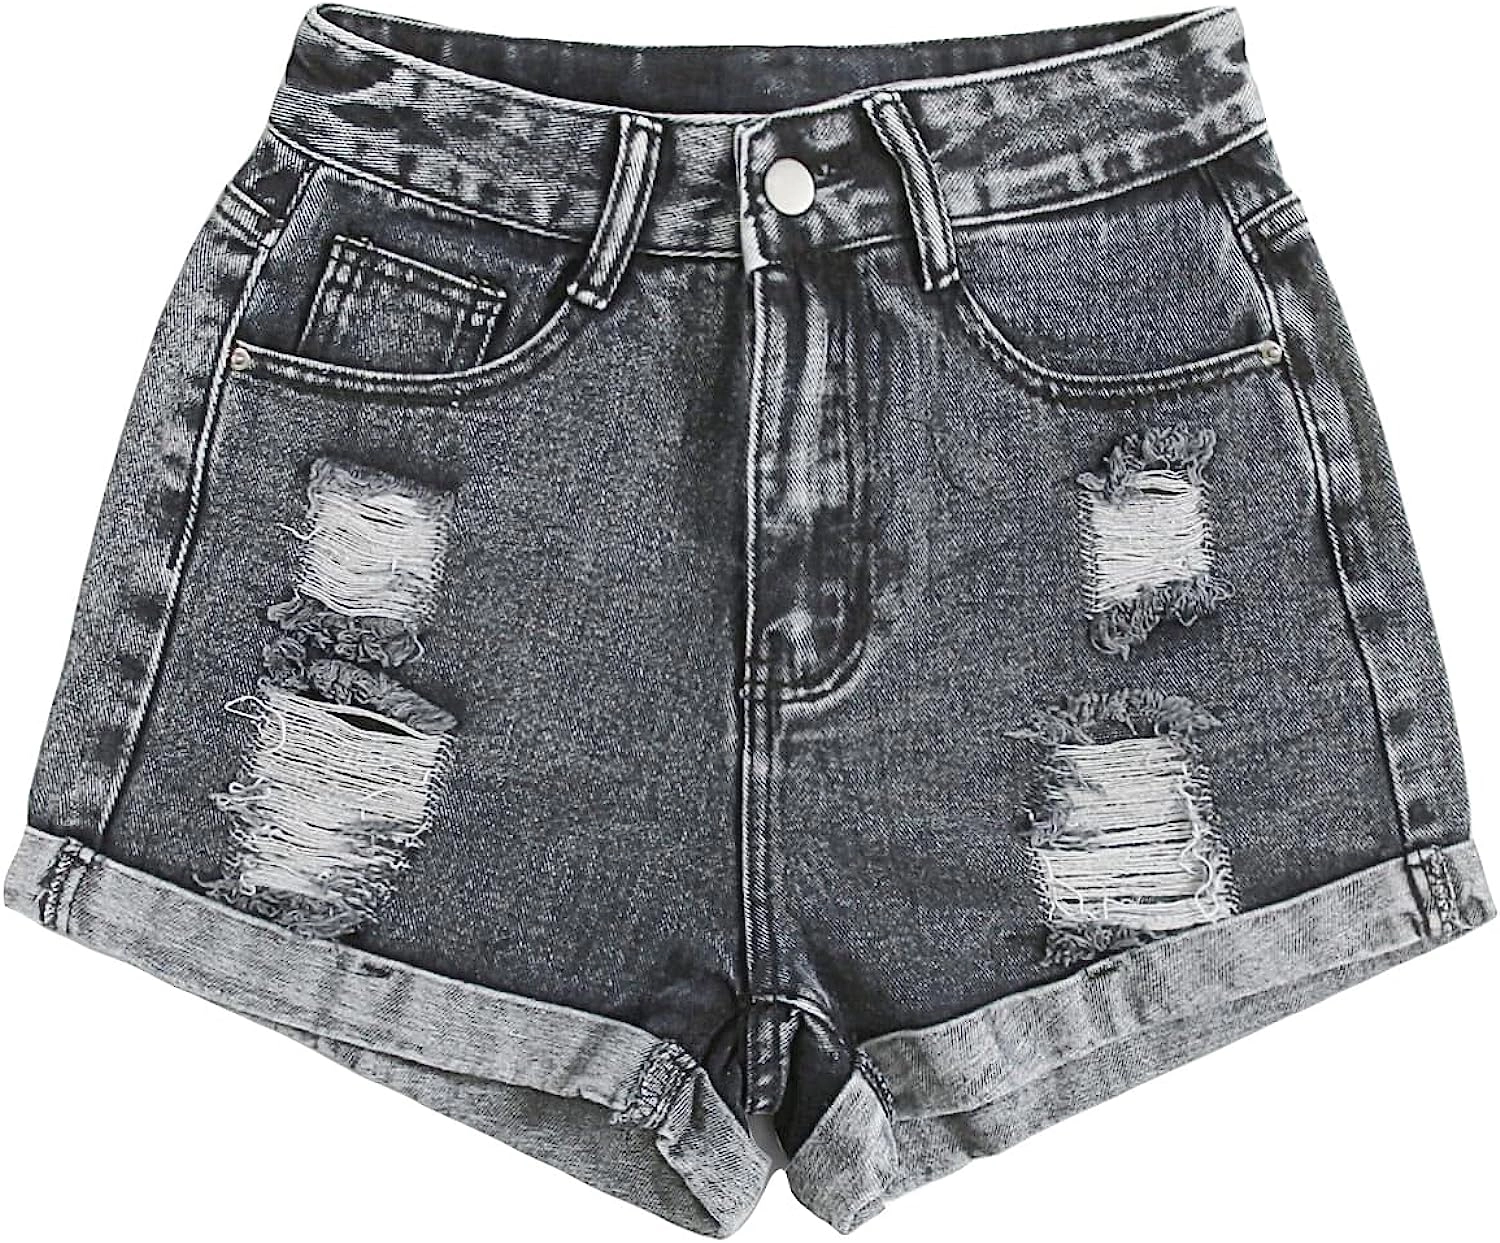 Women's Straight Denim Jean Shorts from Bangladesh Pants Factory